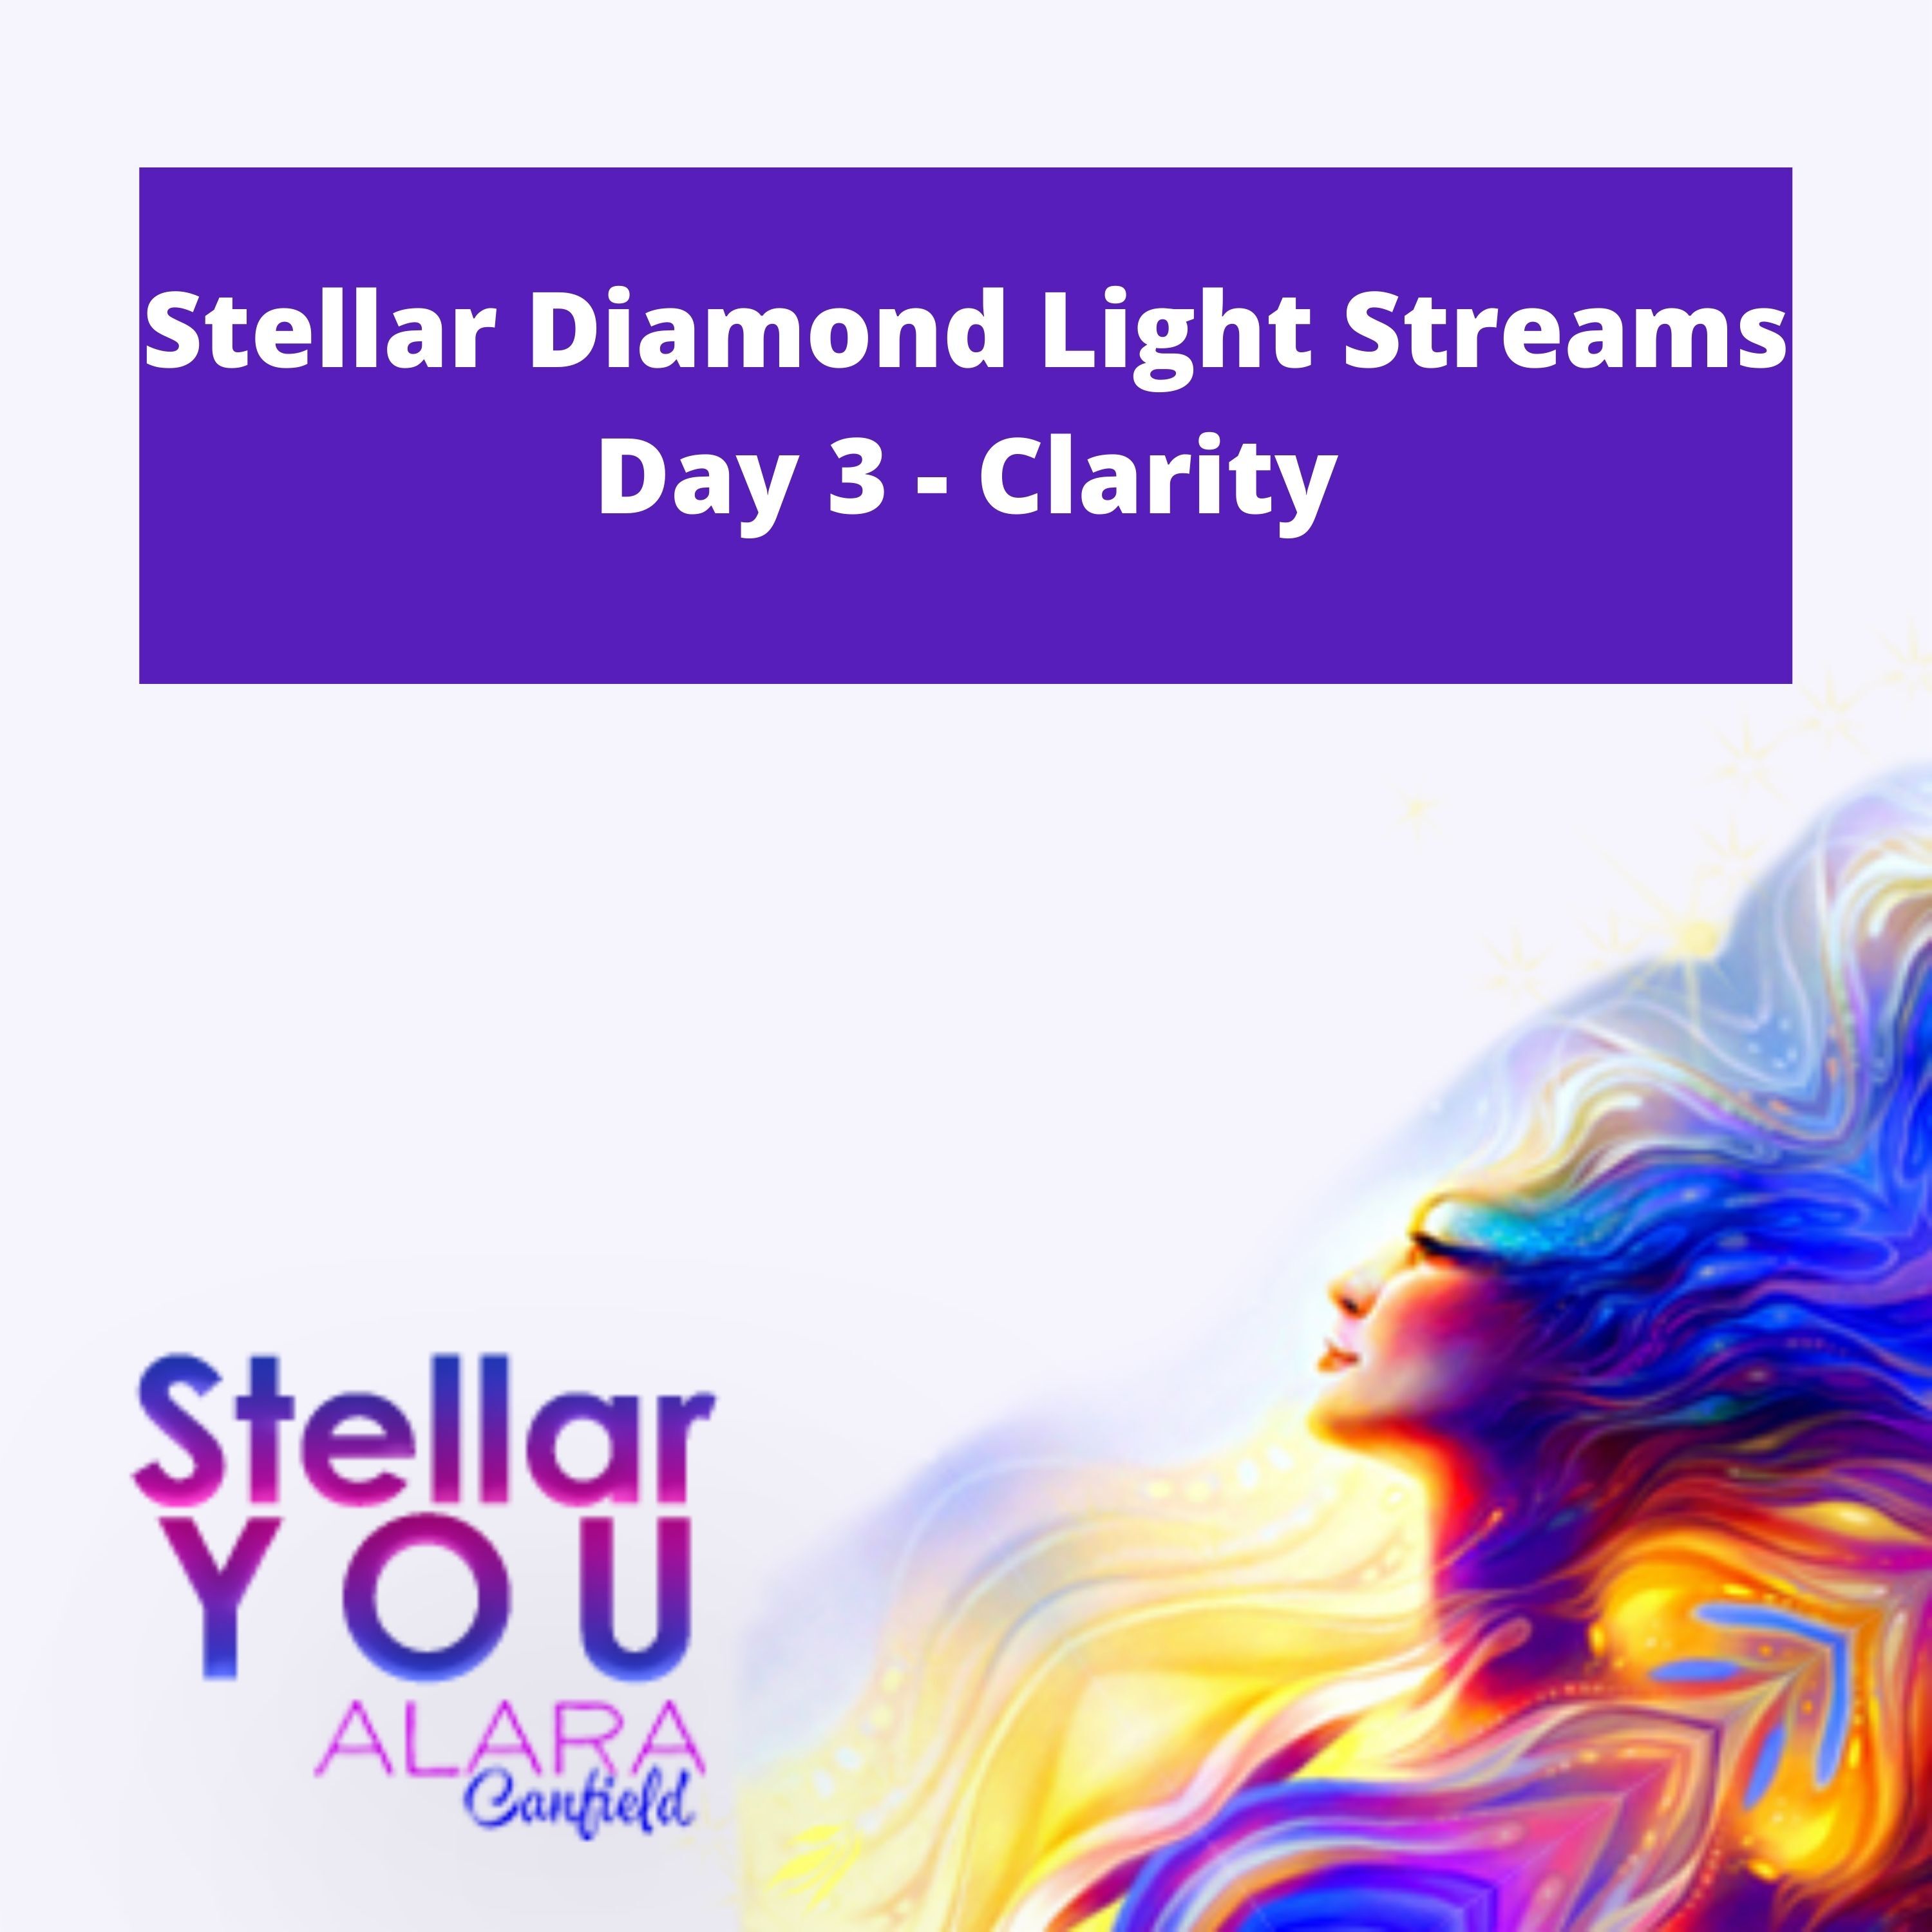 Stellar Diamond Light Streams Day 3 - Clarity